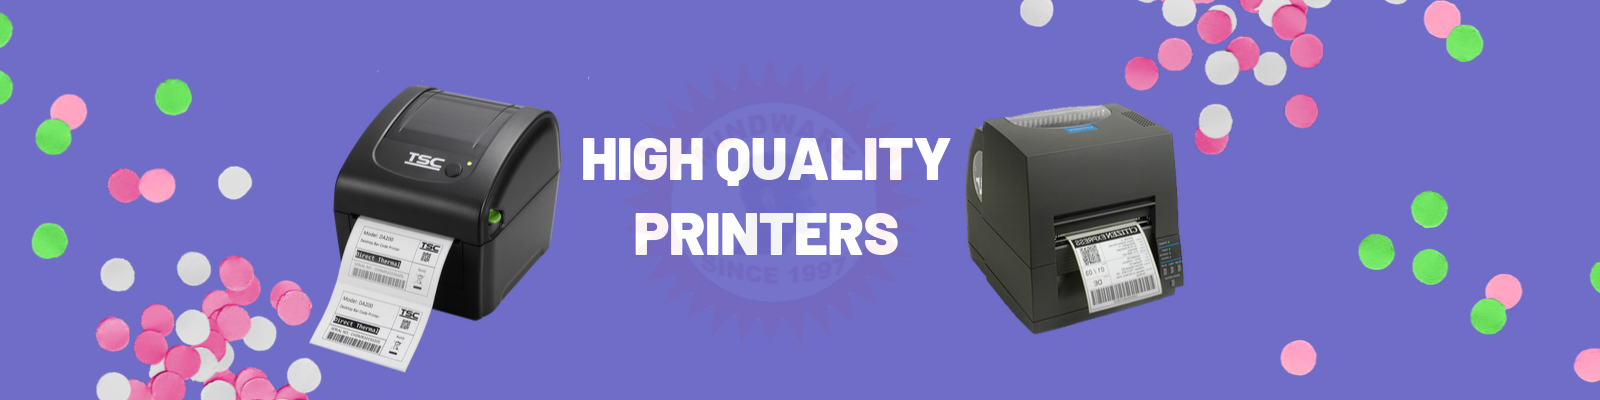 high-quality-printers